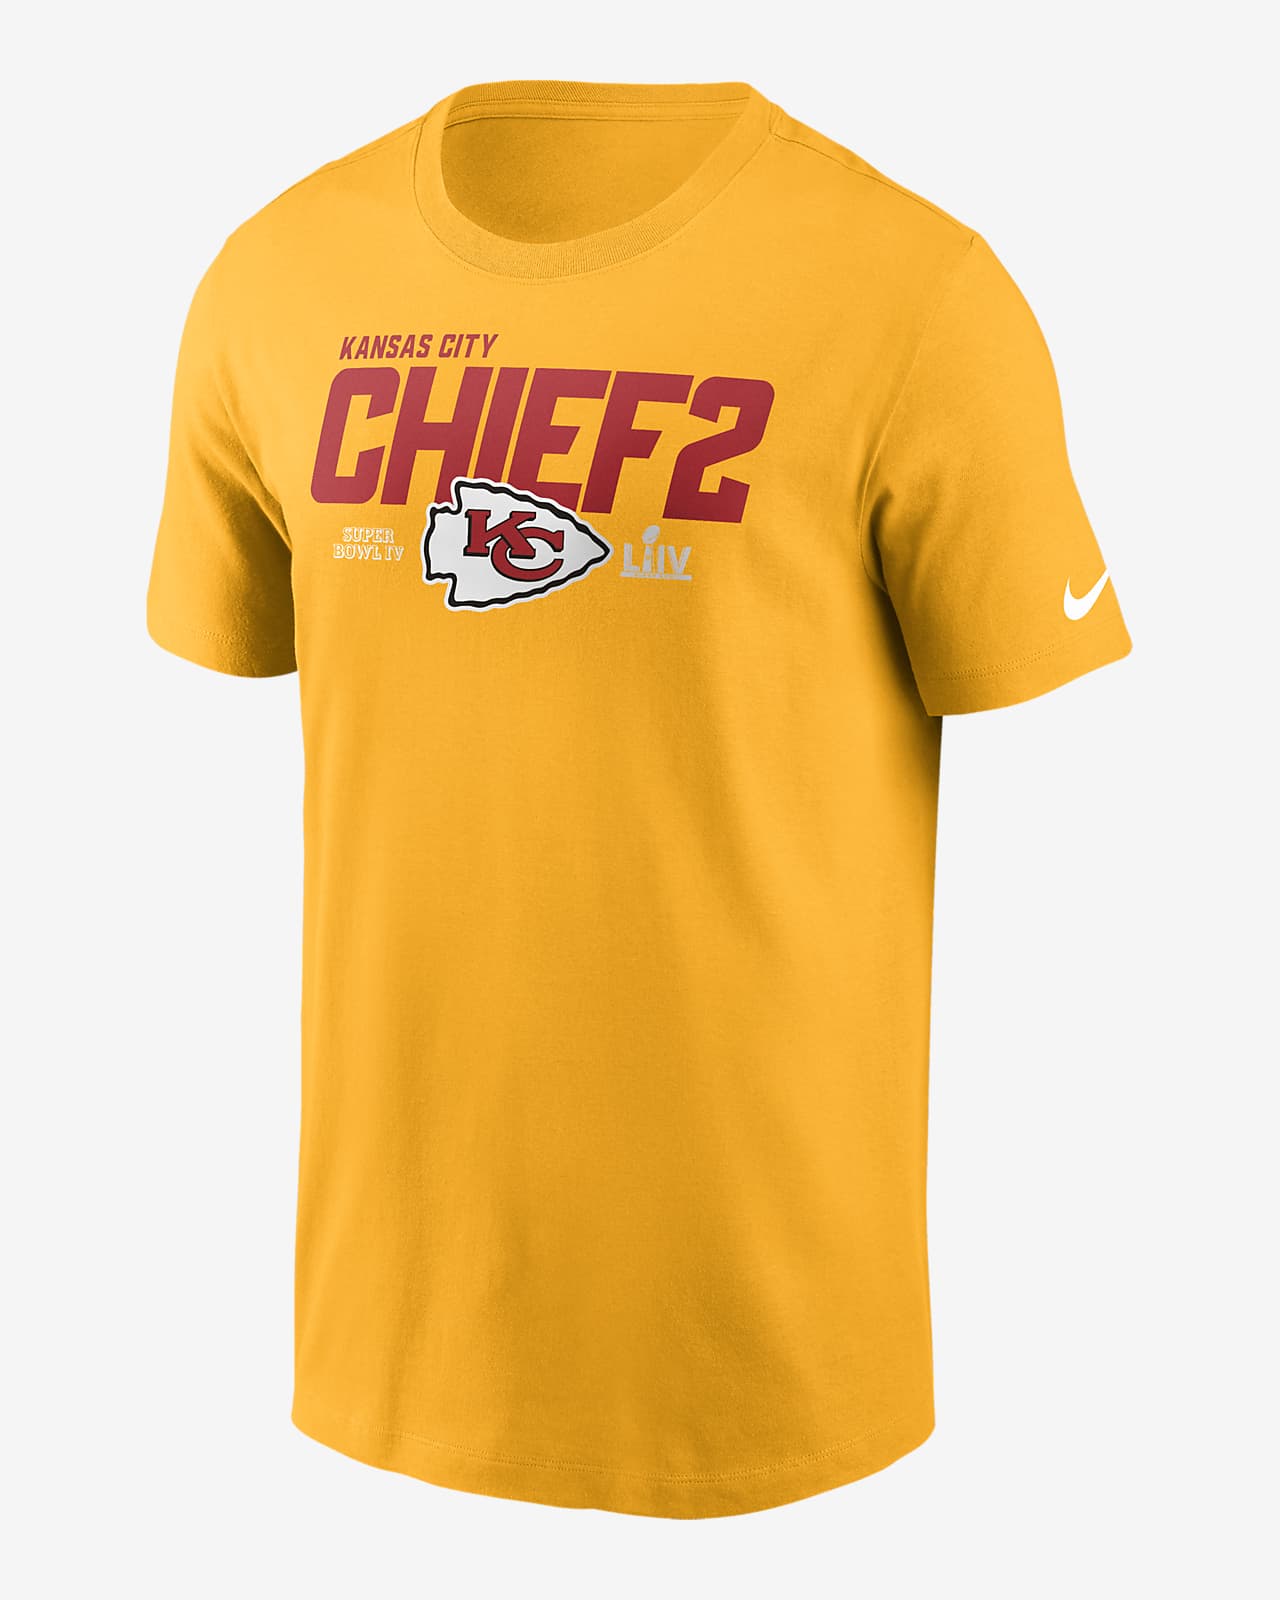 nfl chiefs shirts